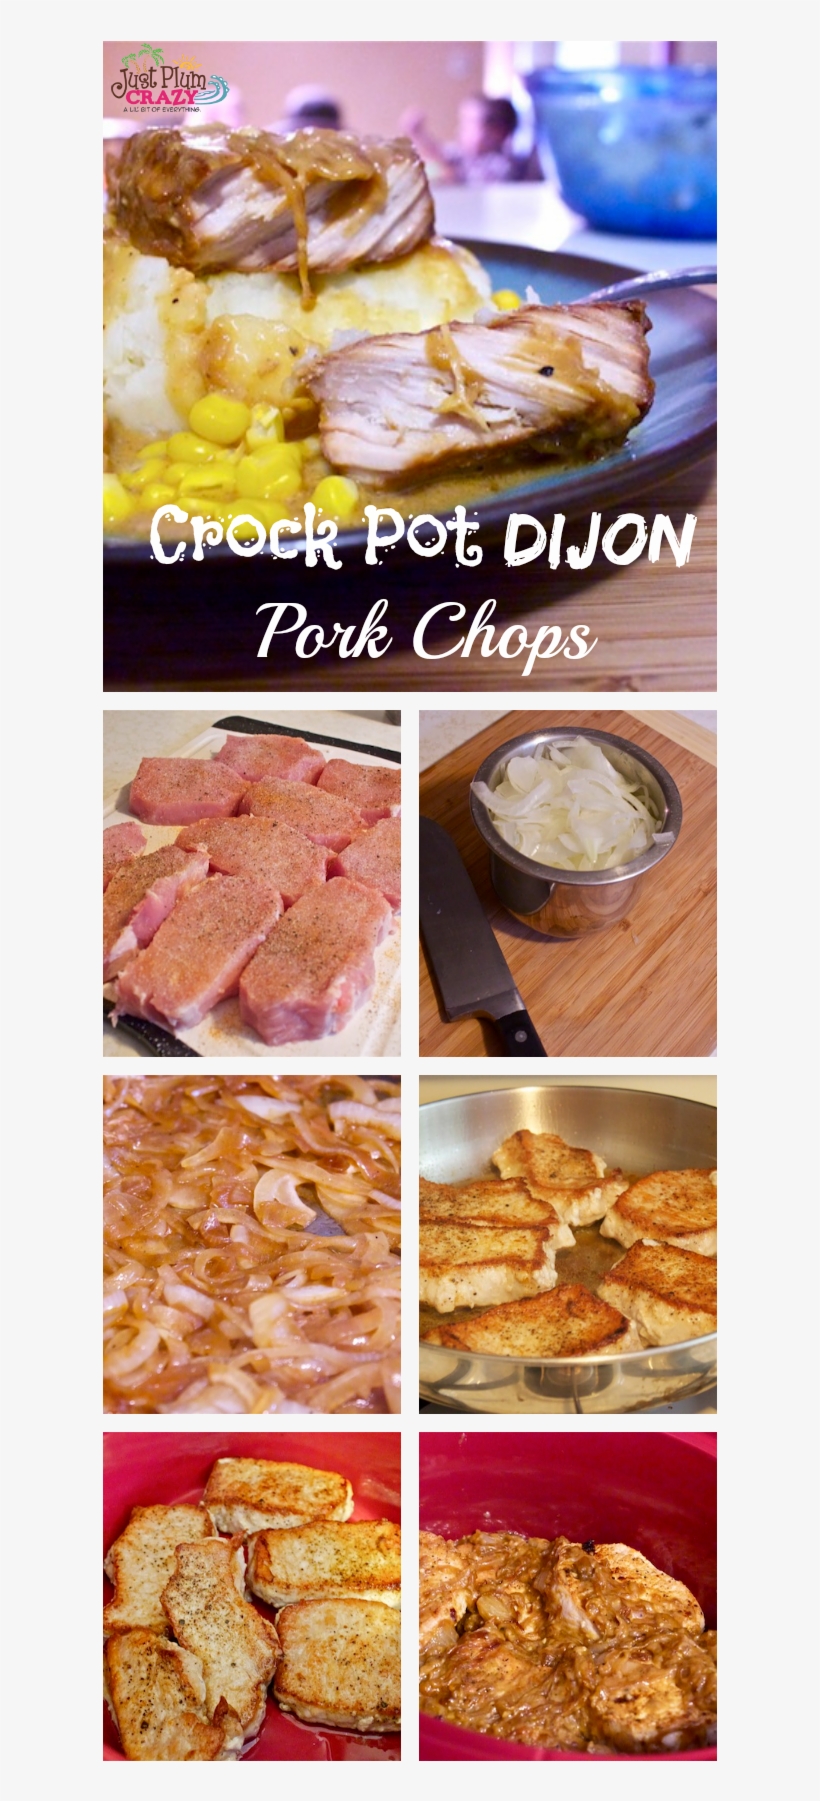 Crock Pot Pork Chops With Caramelized Onion & Dijon - Banana Bread, transparent png #3422846